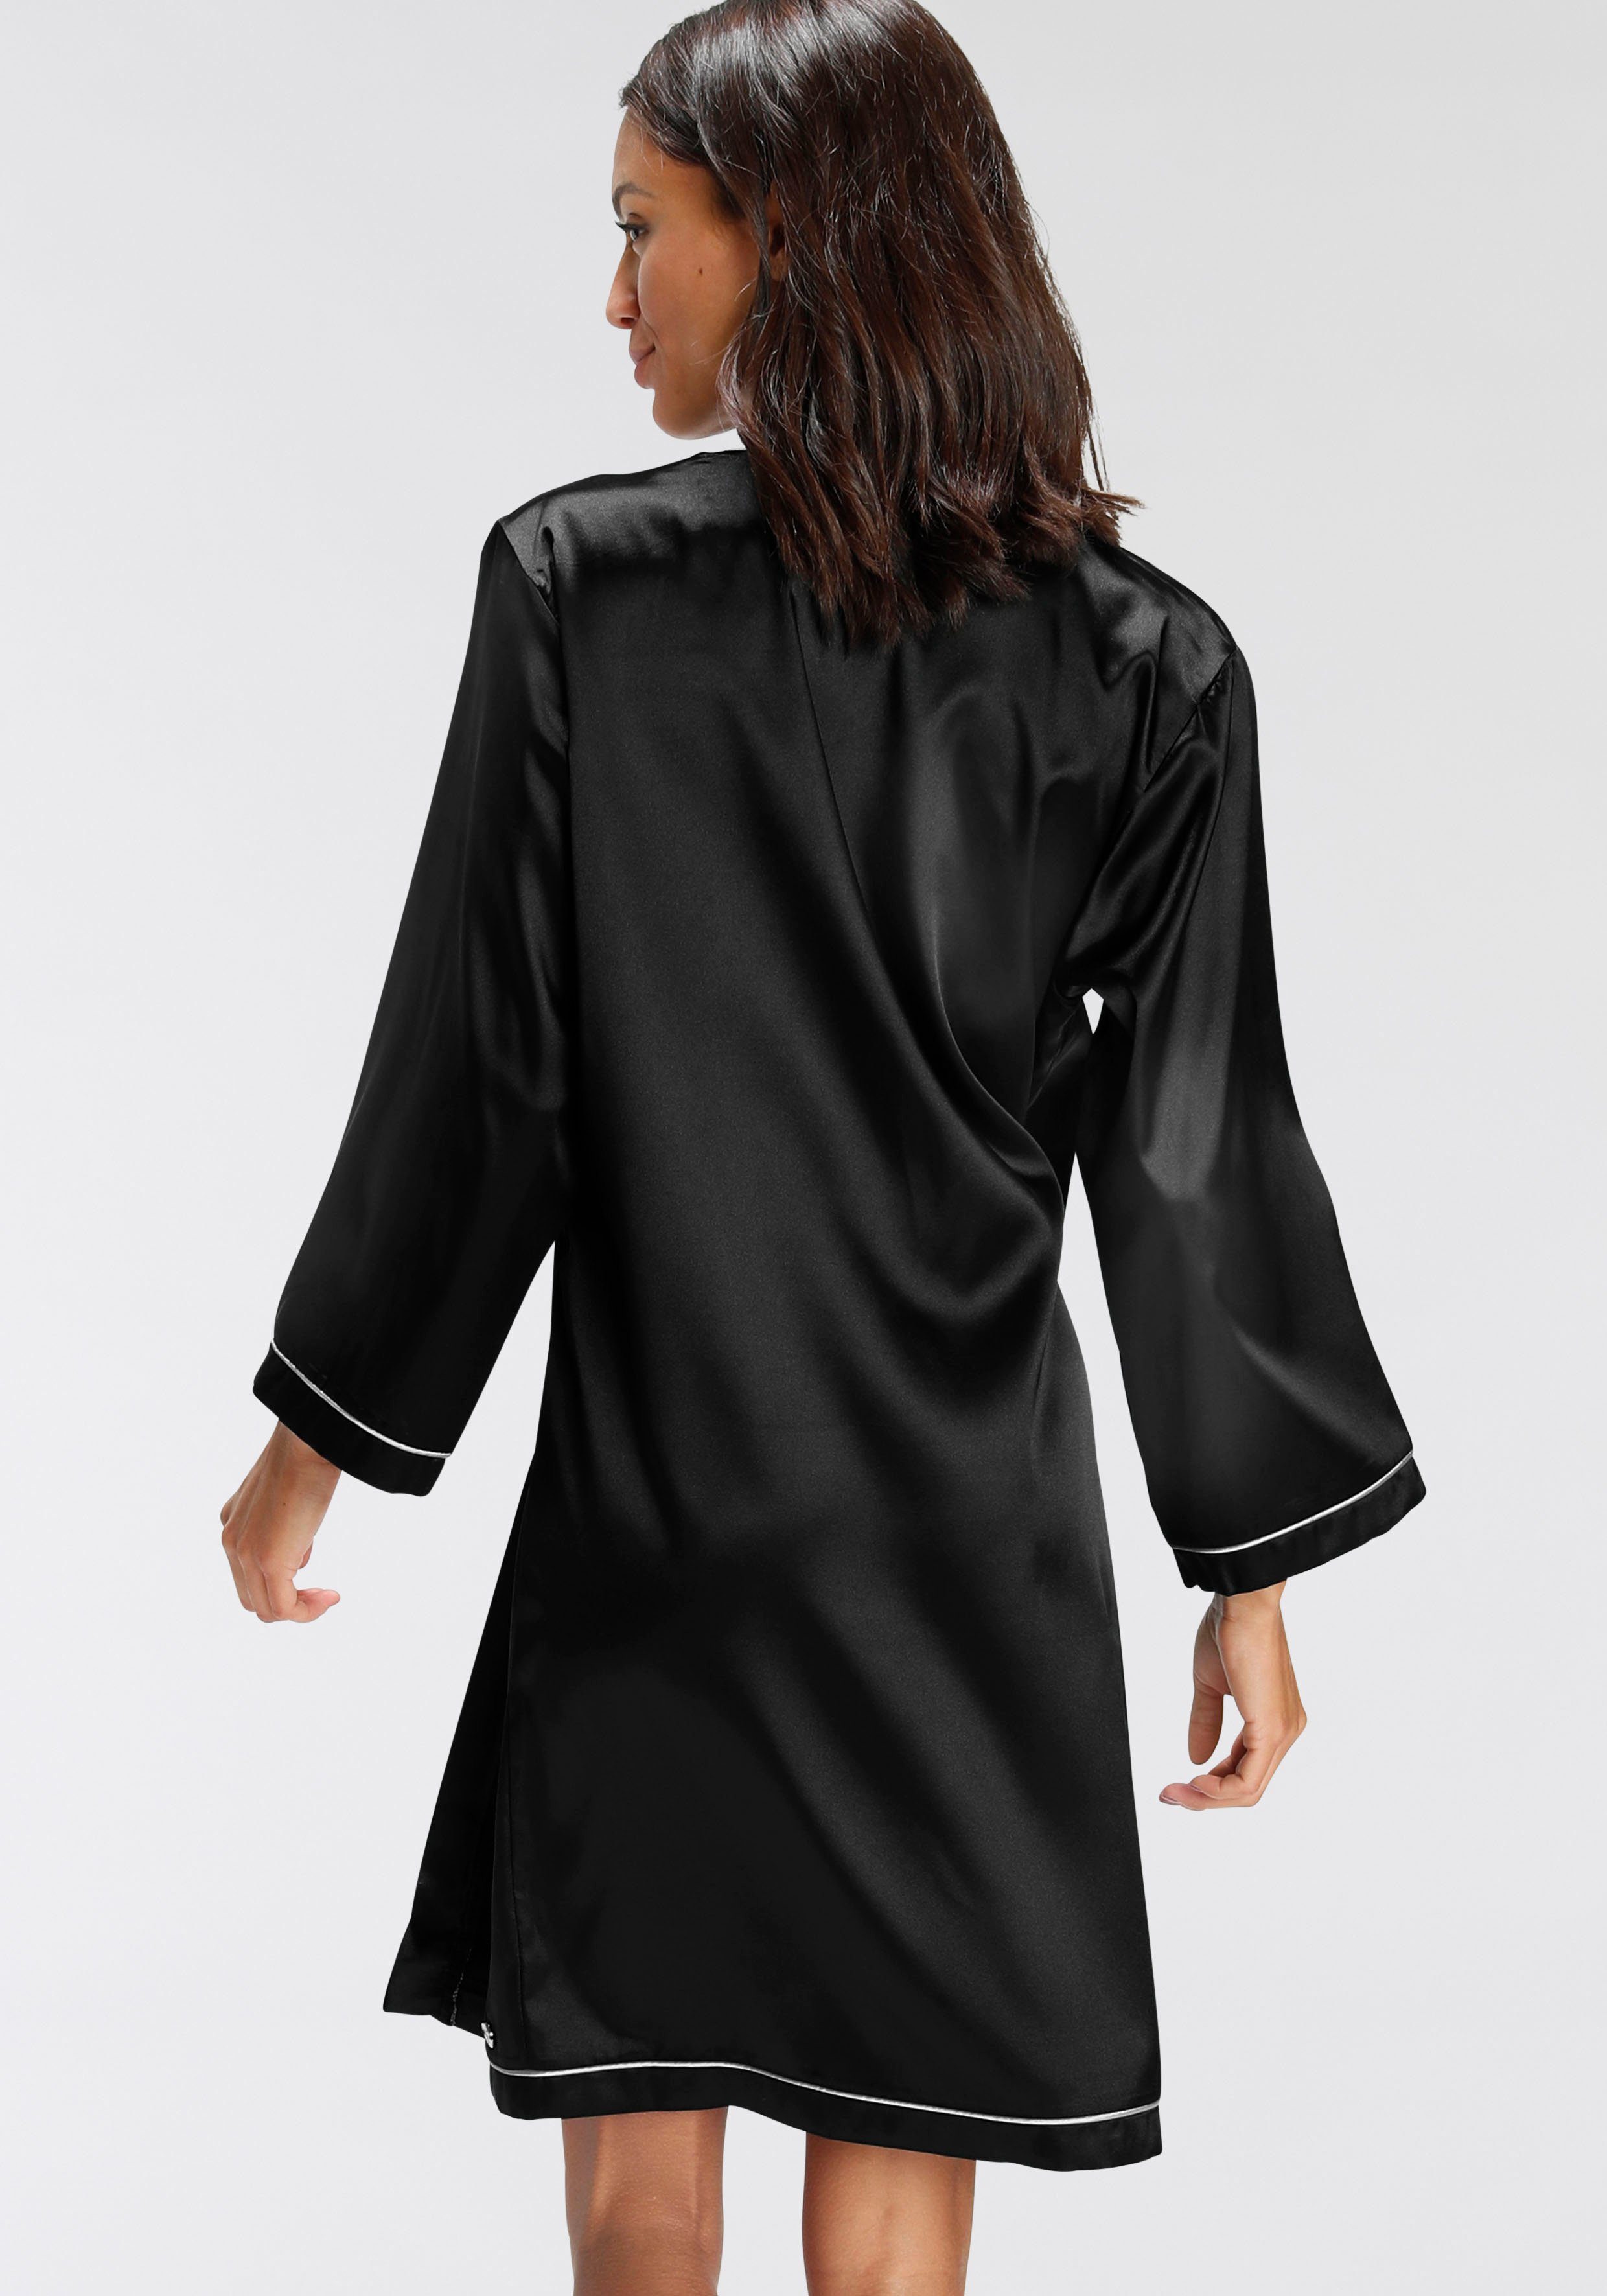 mit Kimono, Kurzform, Banani schwarz Kontrastpaspel-Details Bruno Satin,